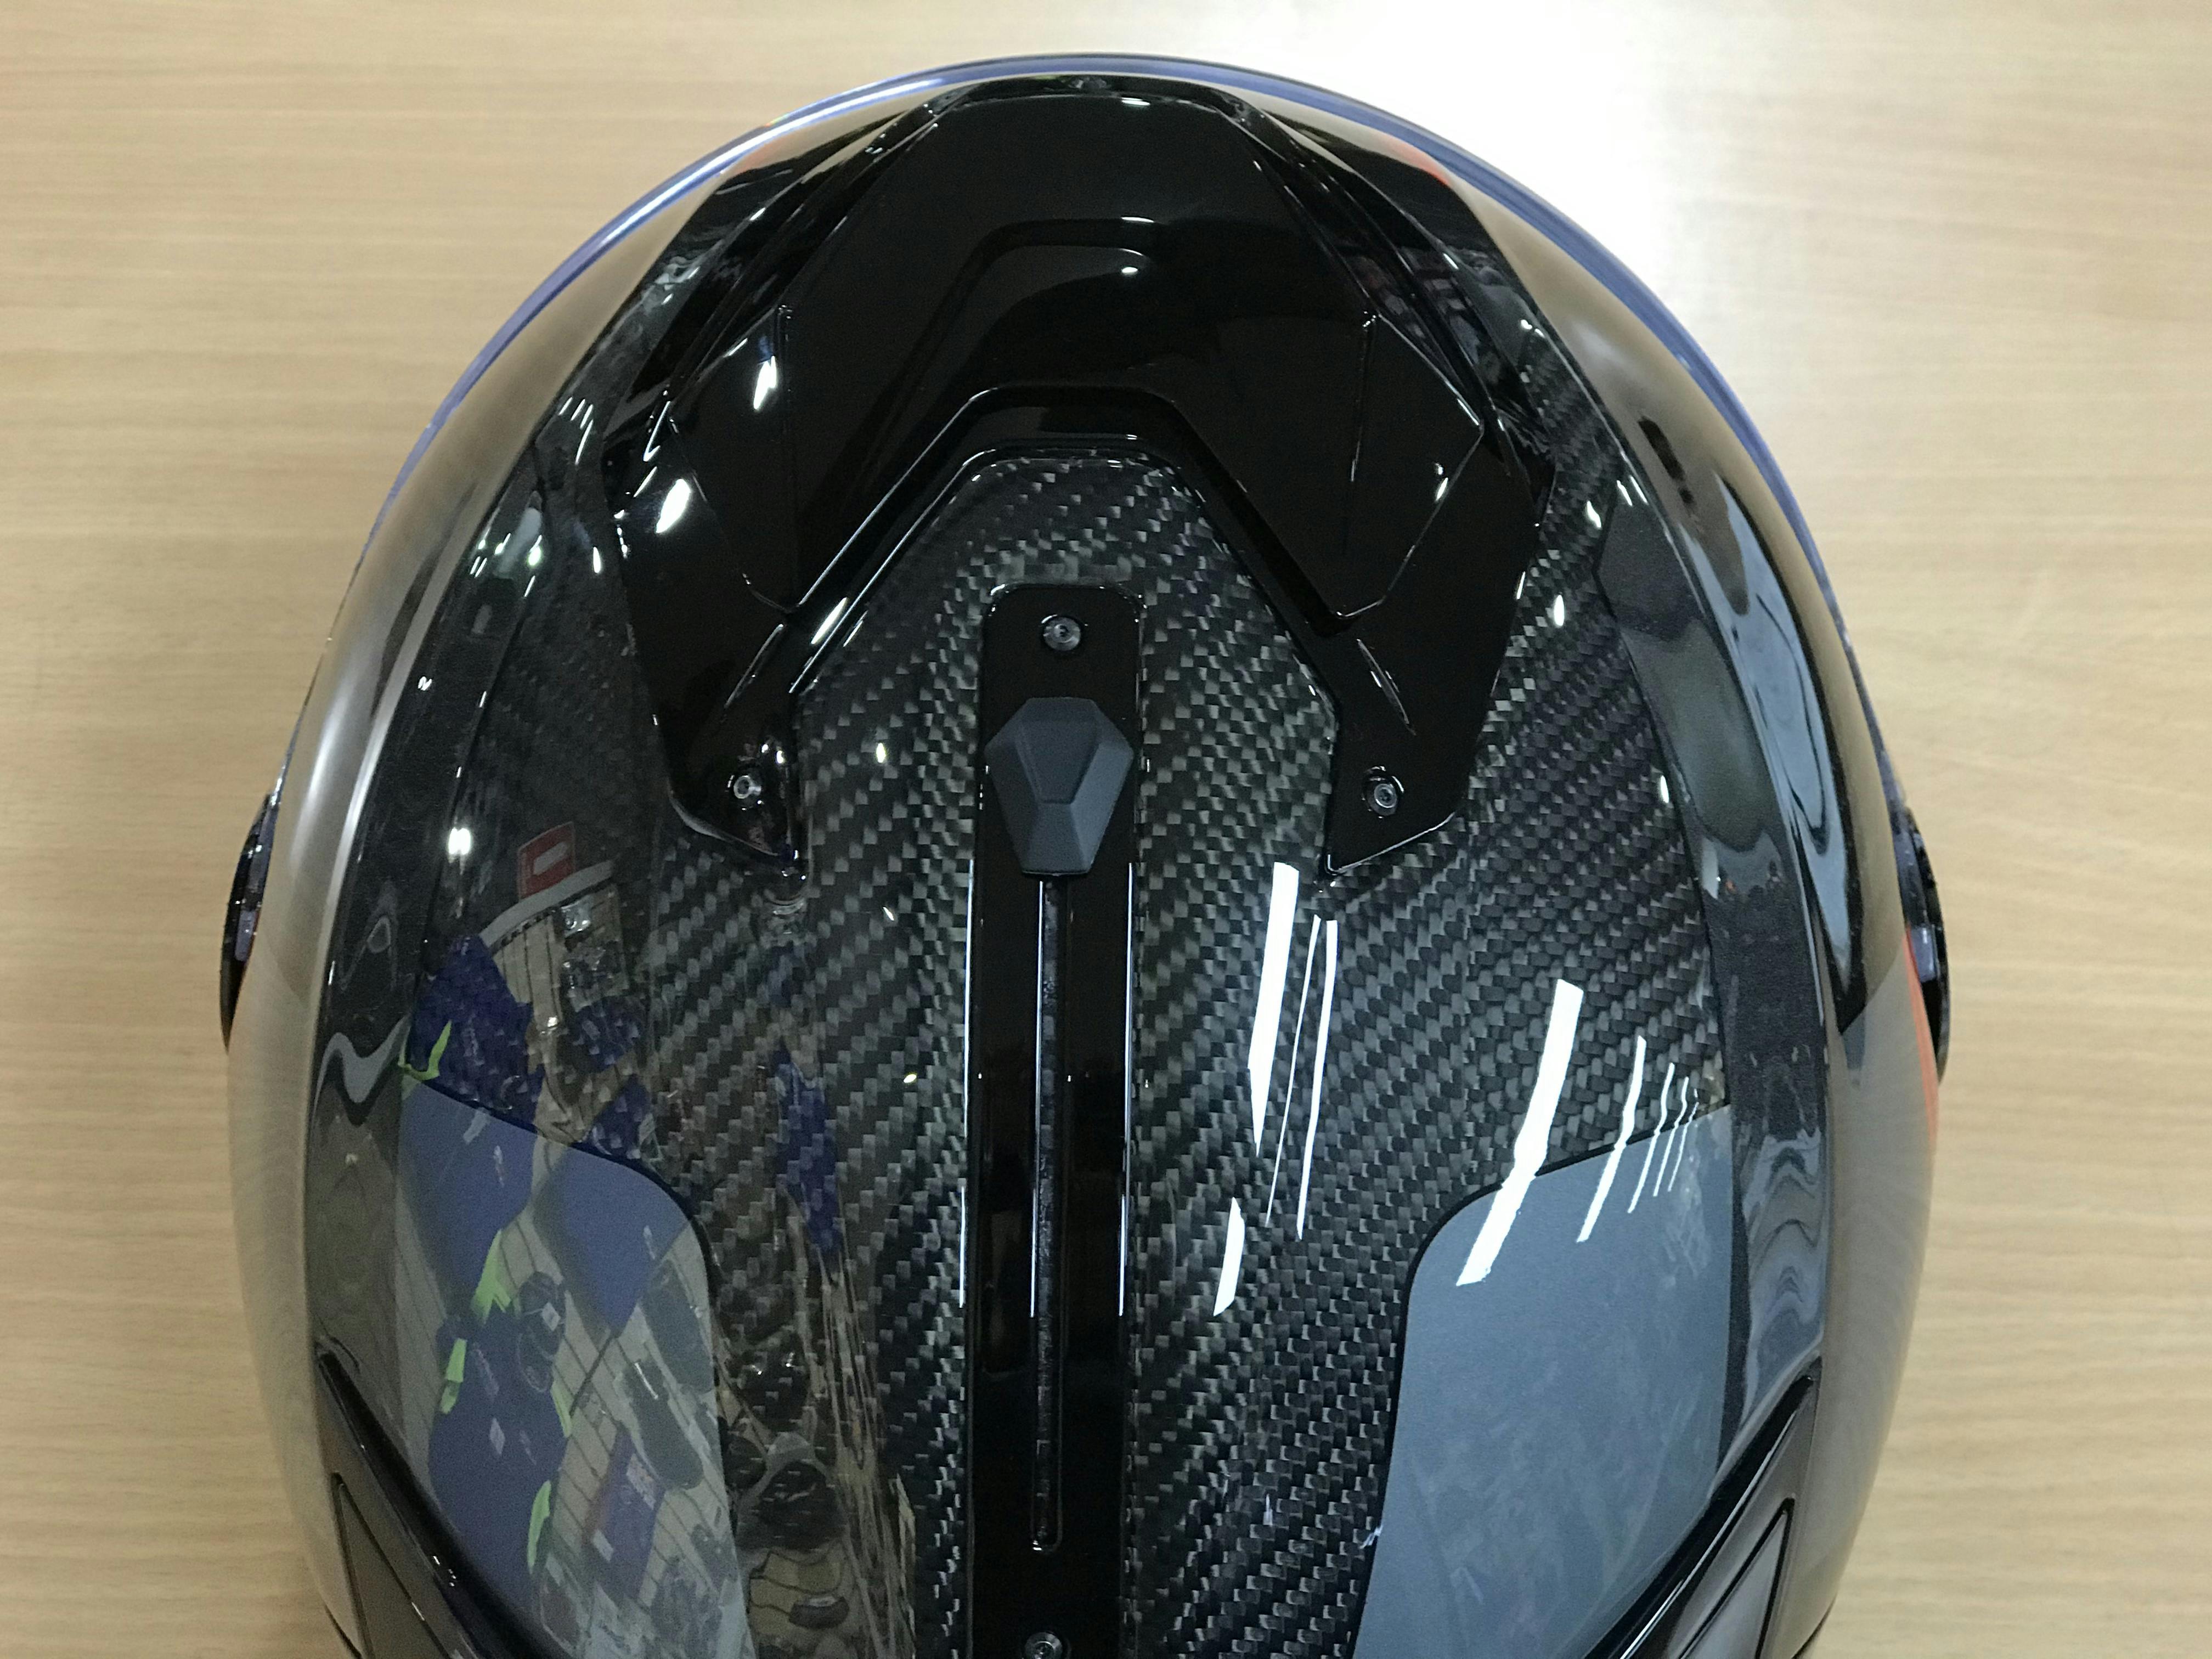 The new rubber internal sun visor slider on the Shark Carbon Spartan GT